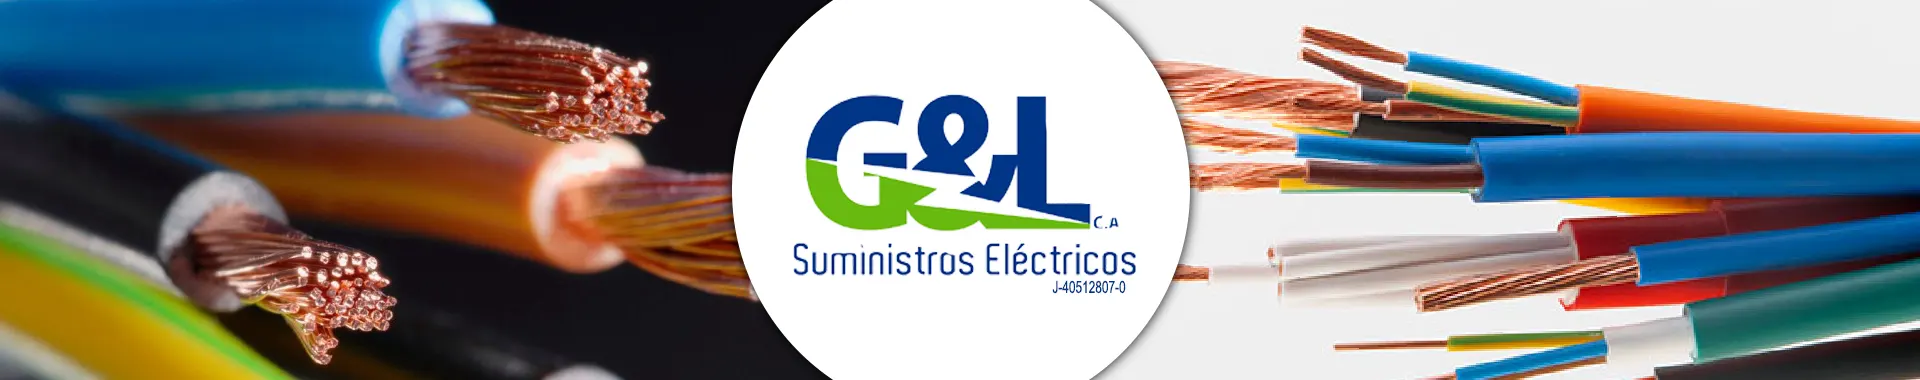 Imagen 1 del perfil de Suministros Eléctricos G&L